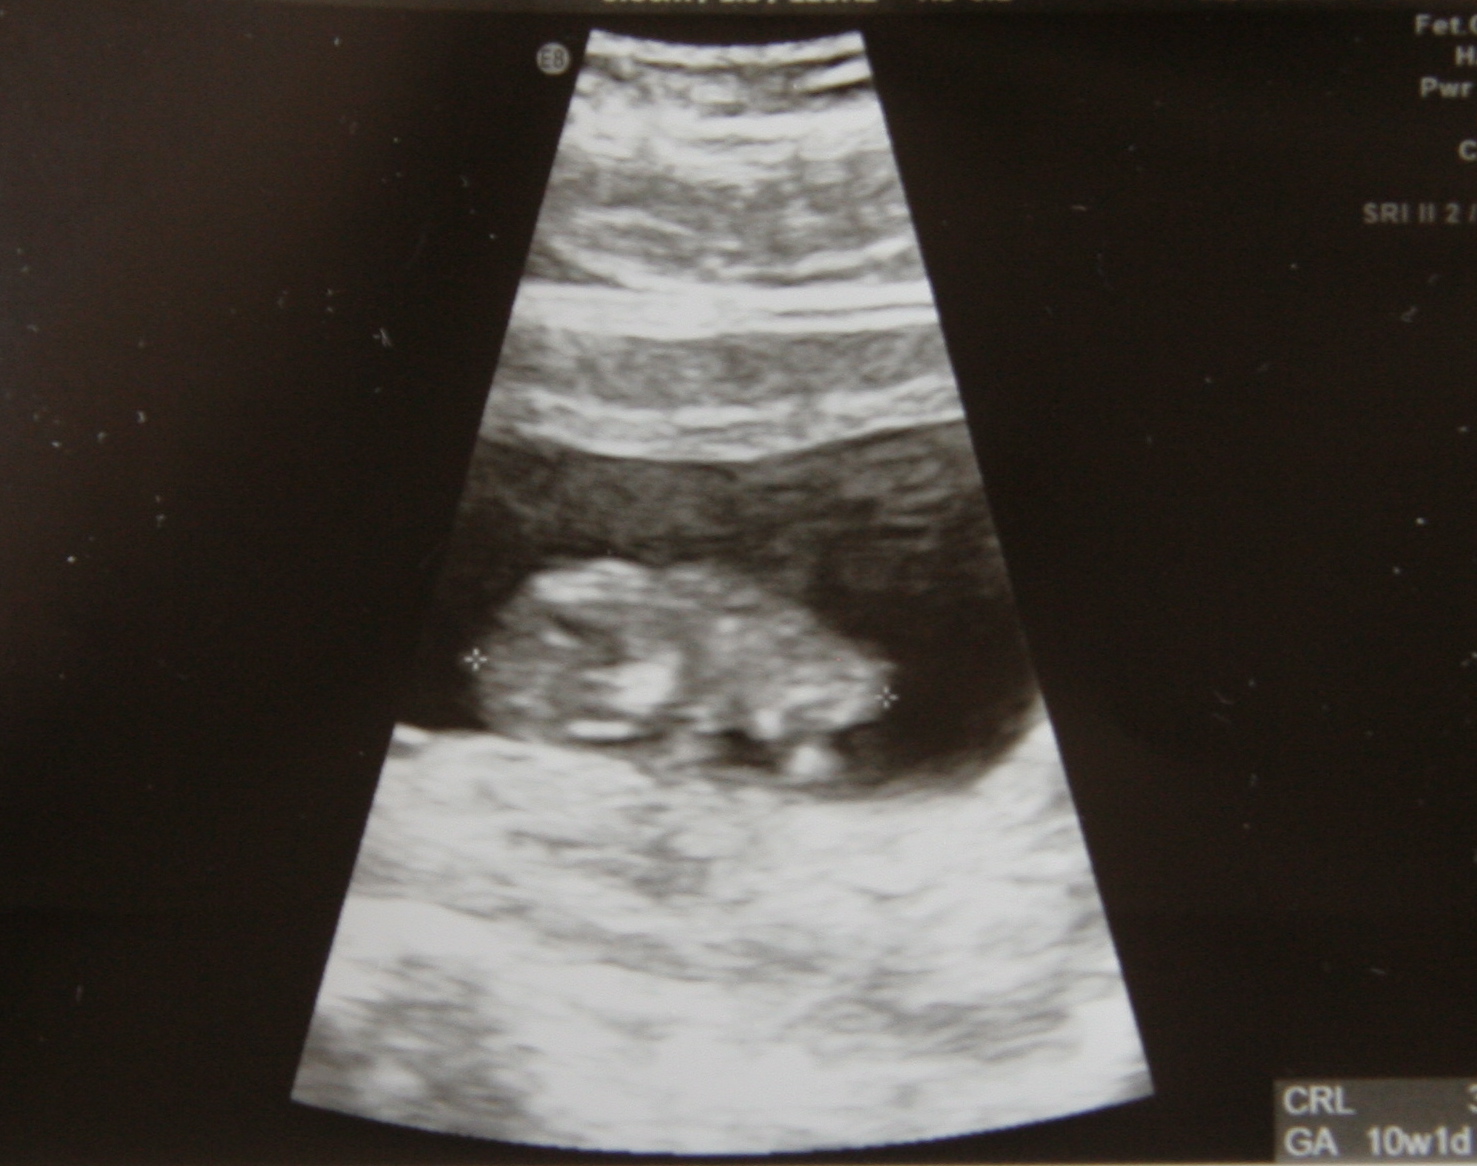 [ultrasound.jpg]